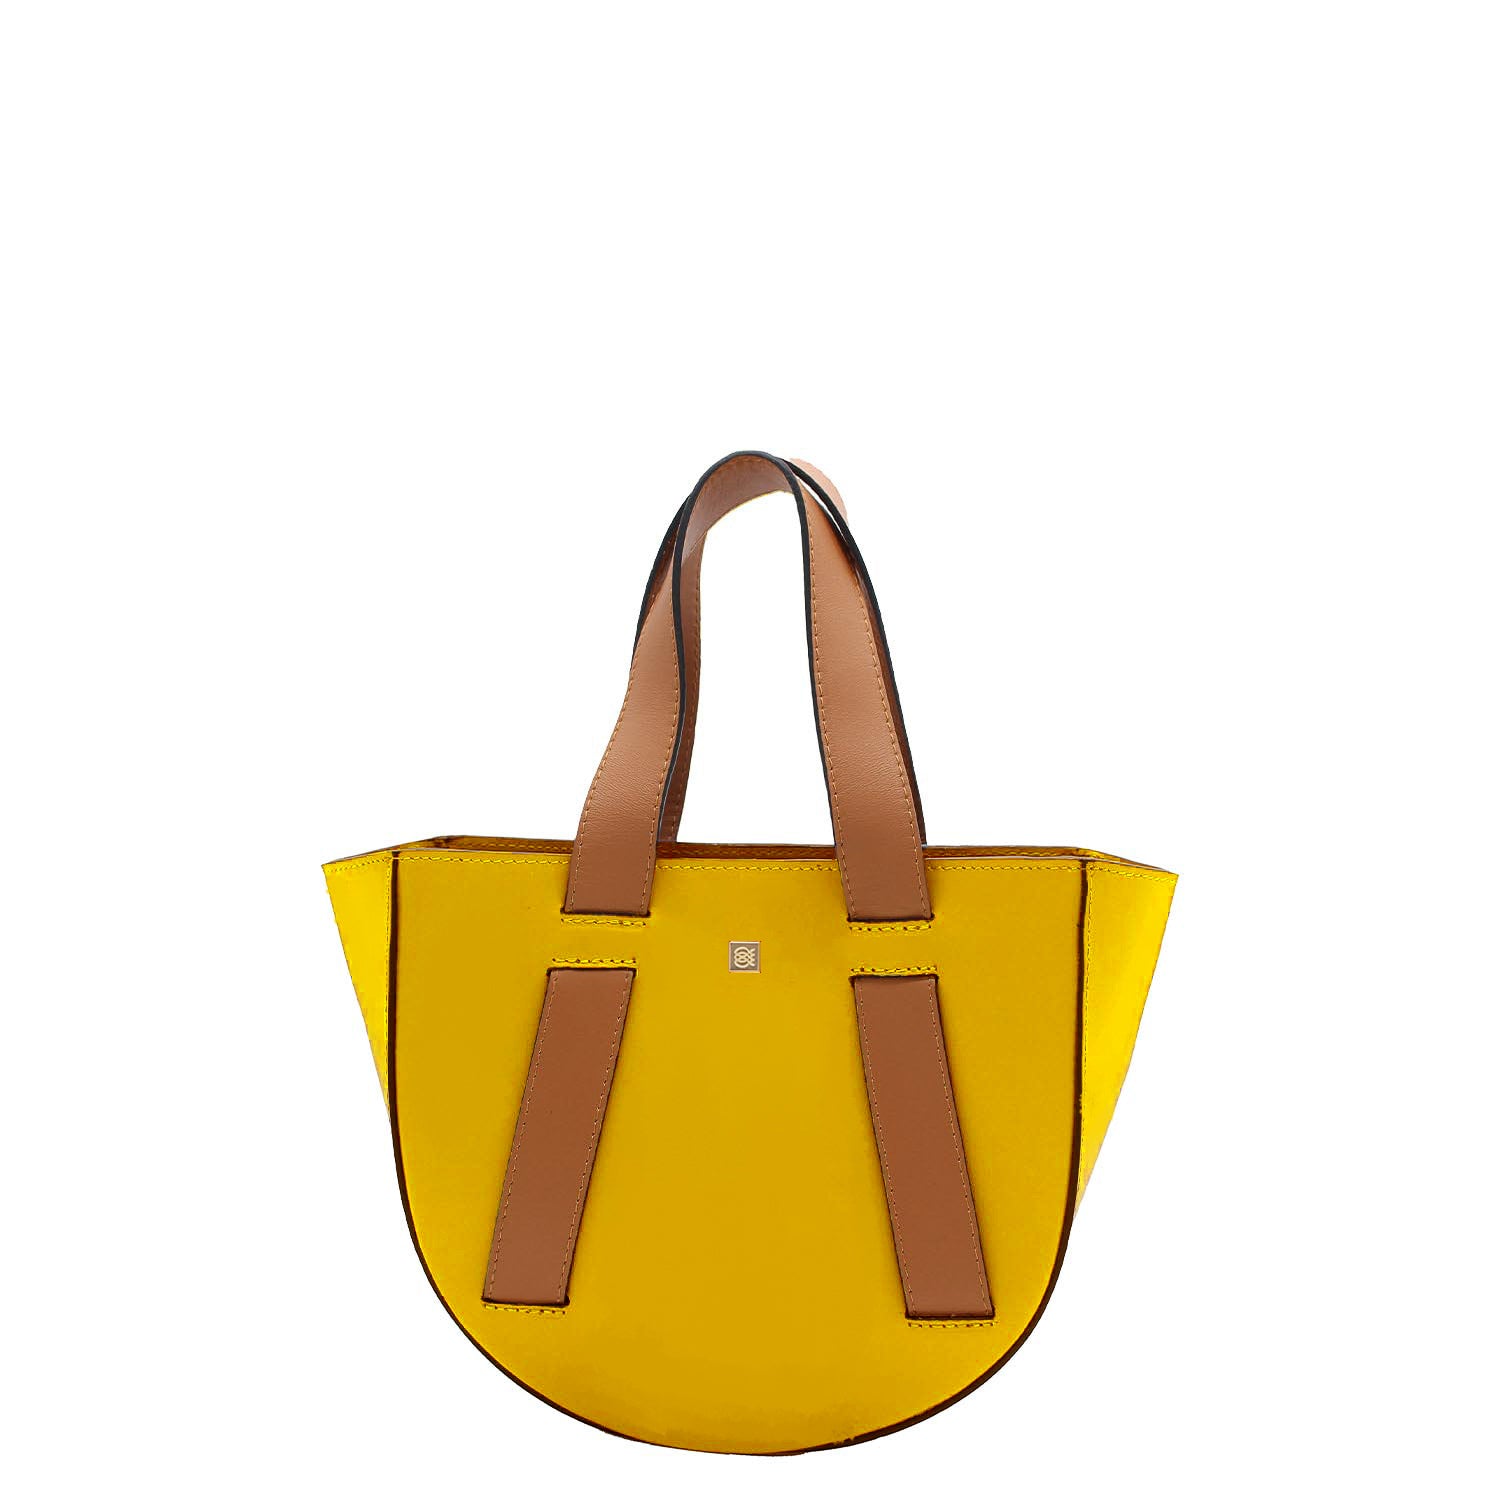 Burlington Small Handbag Purse Made in Italy Camel Color Crossbody